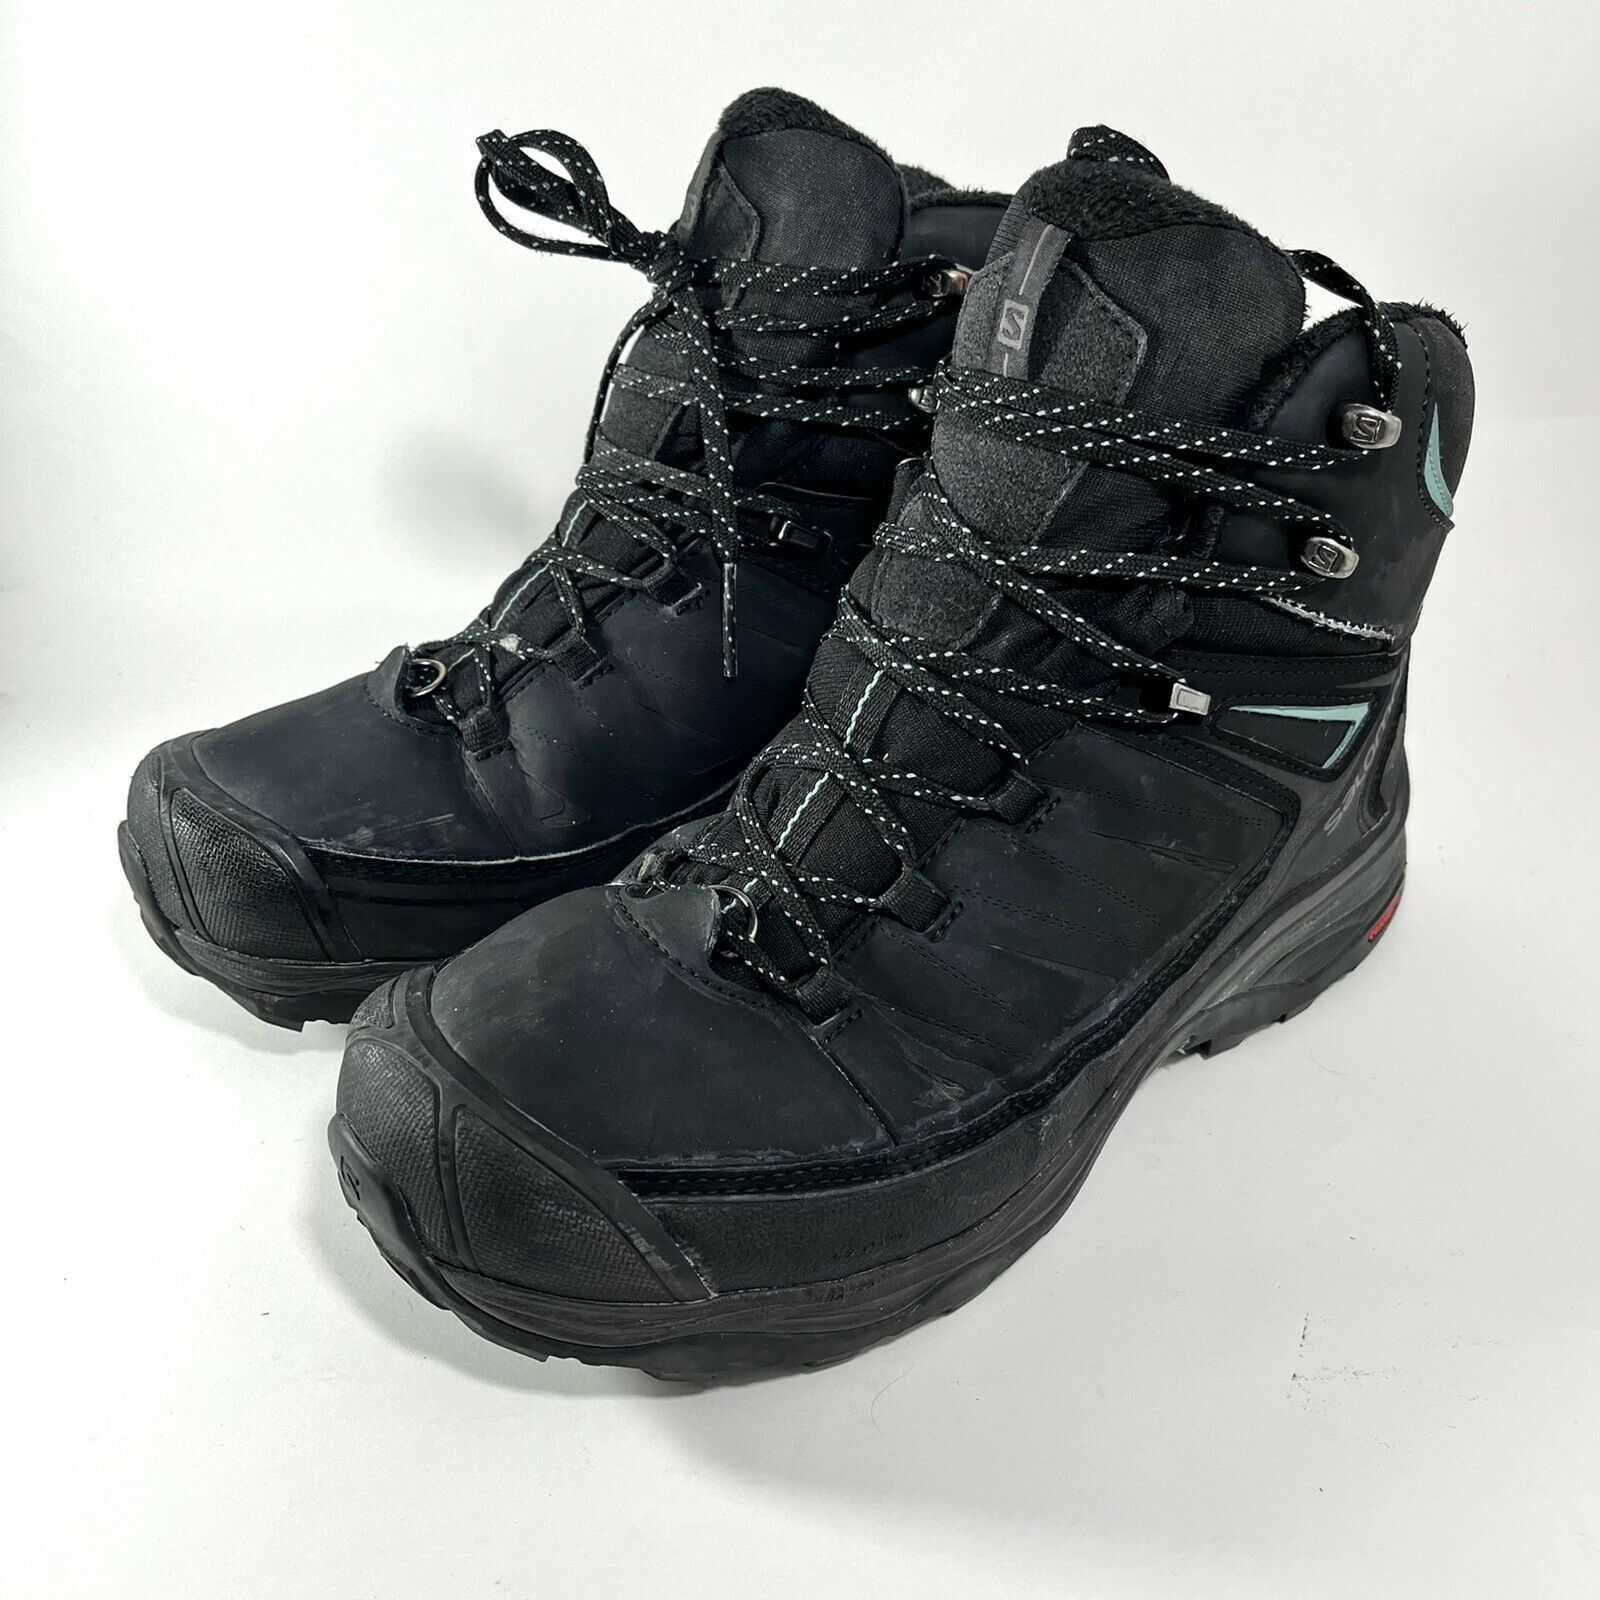 Salomon X Ultra Mid Waterproof Winter Hiking Shoes 404796 Black Womens size 7.5